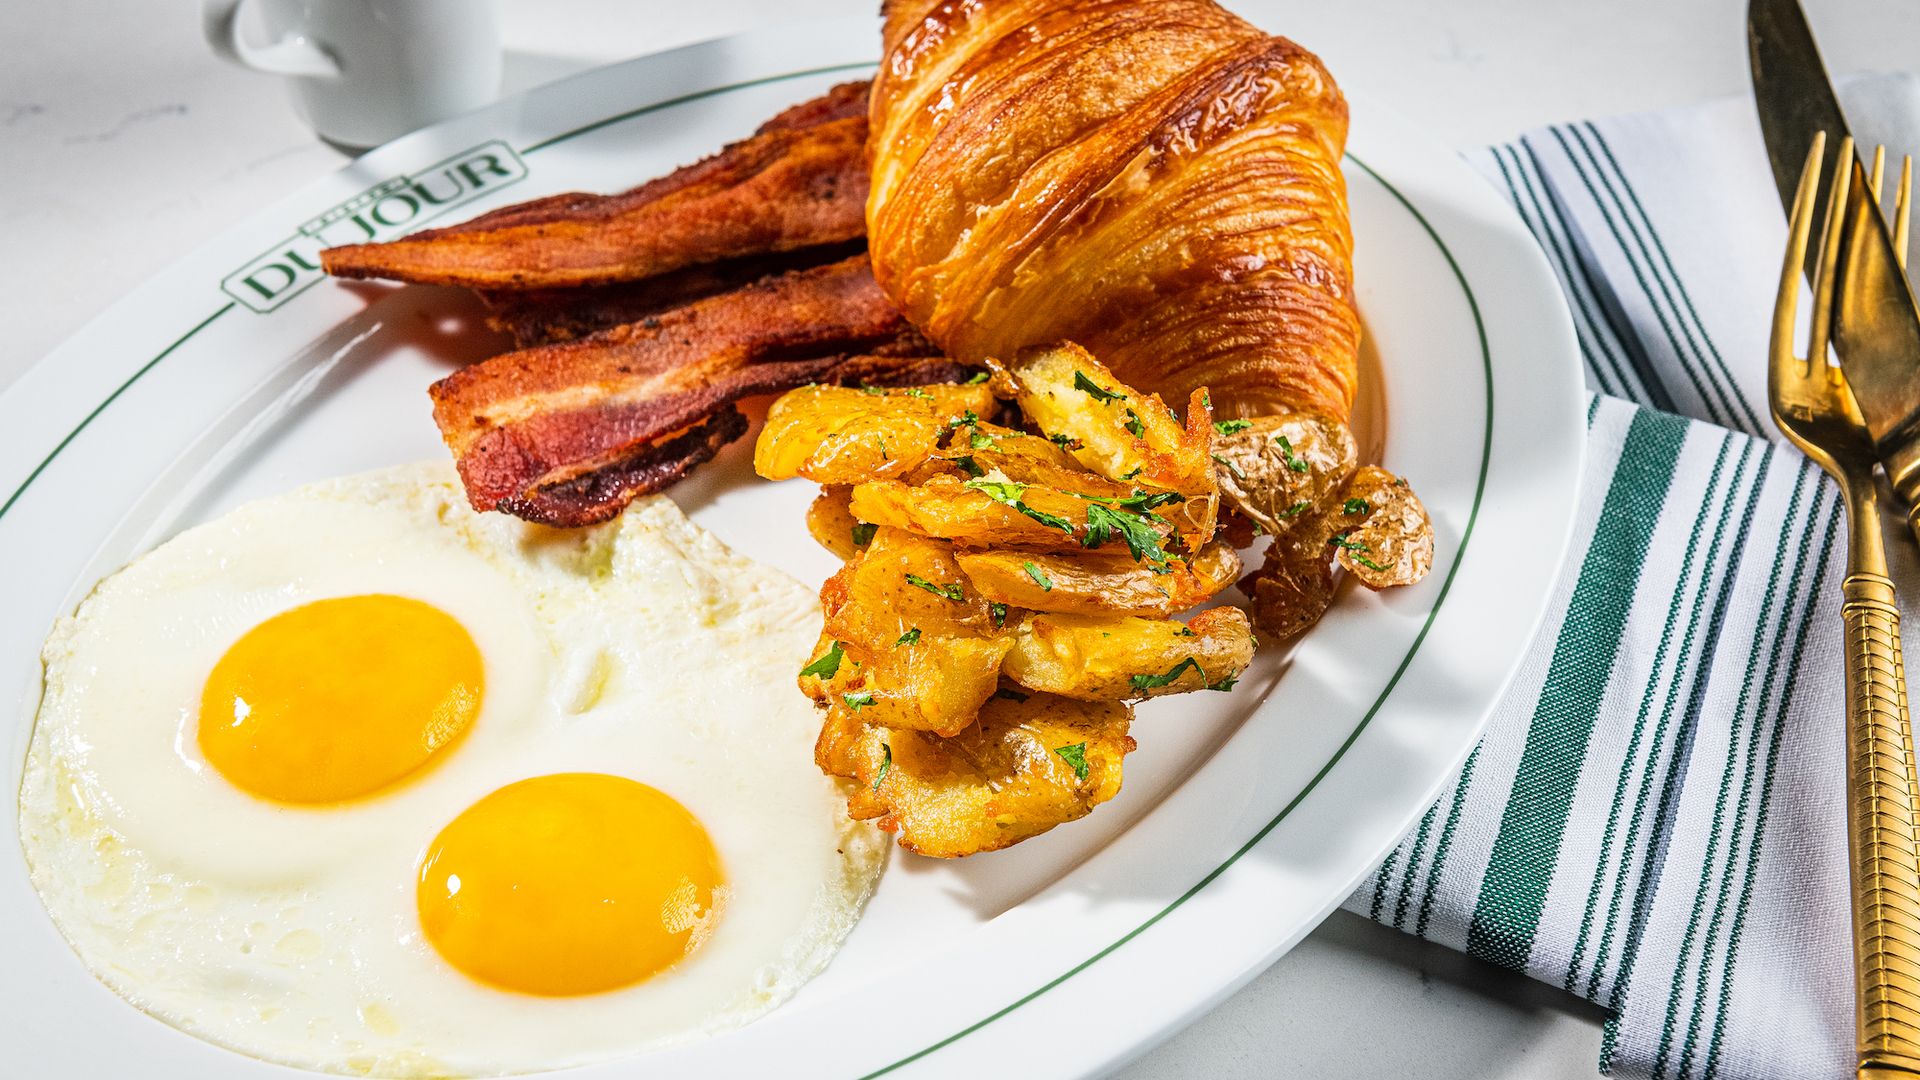 Bistro du Jour breakfast platter. Photo: Rey Lopez